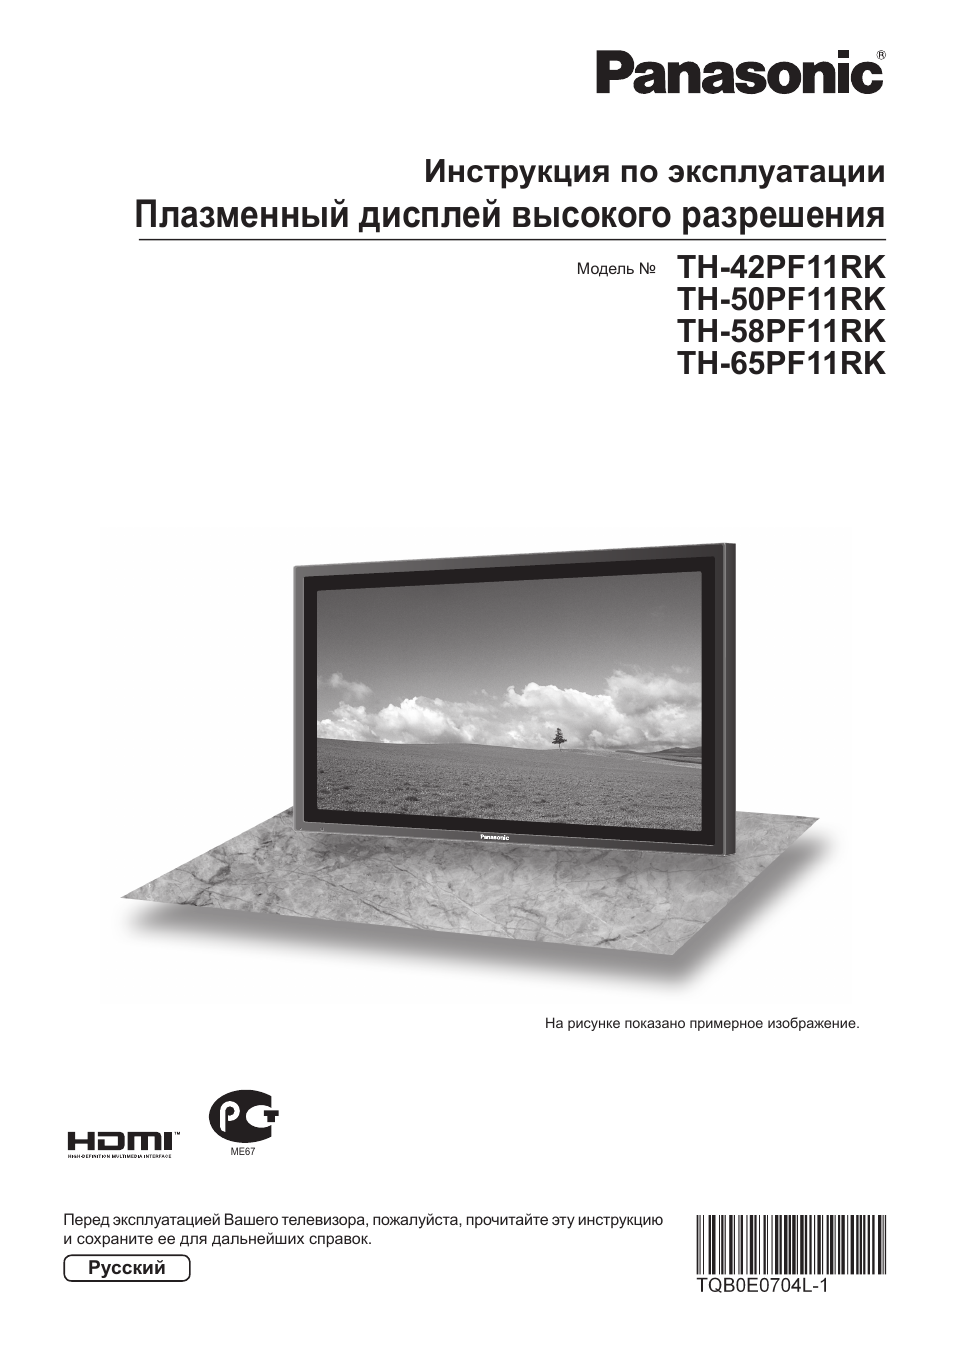 Инструкция по эксплуатации Panasonic TH-50PF11RK | 56 страниц